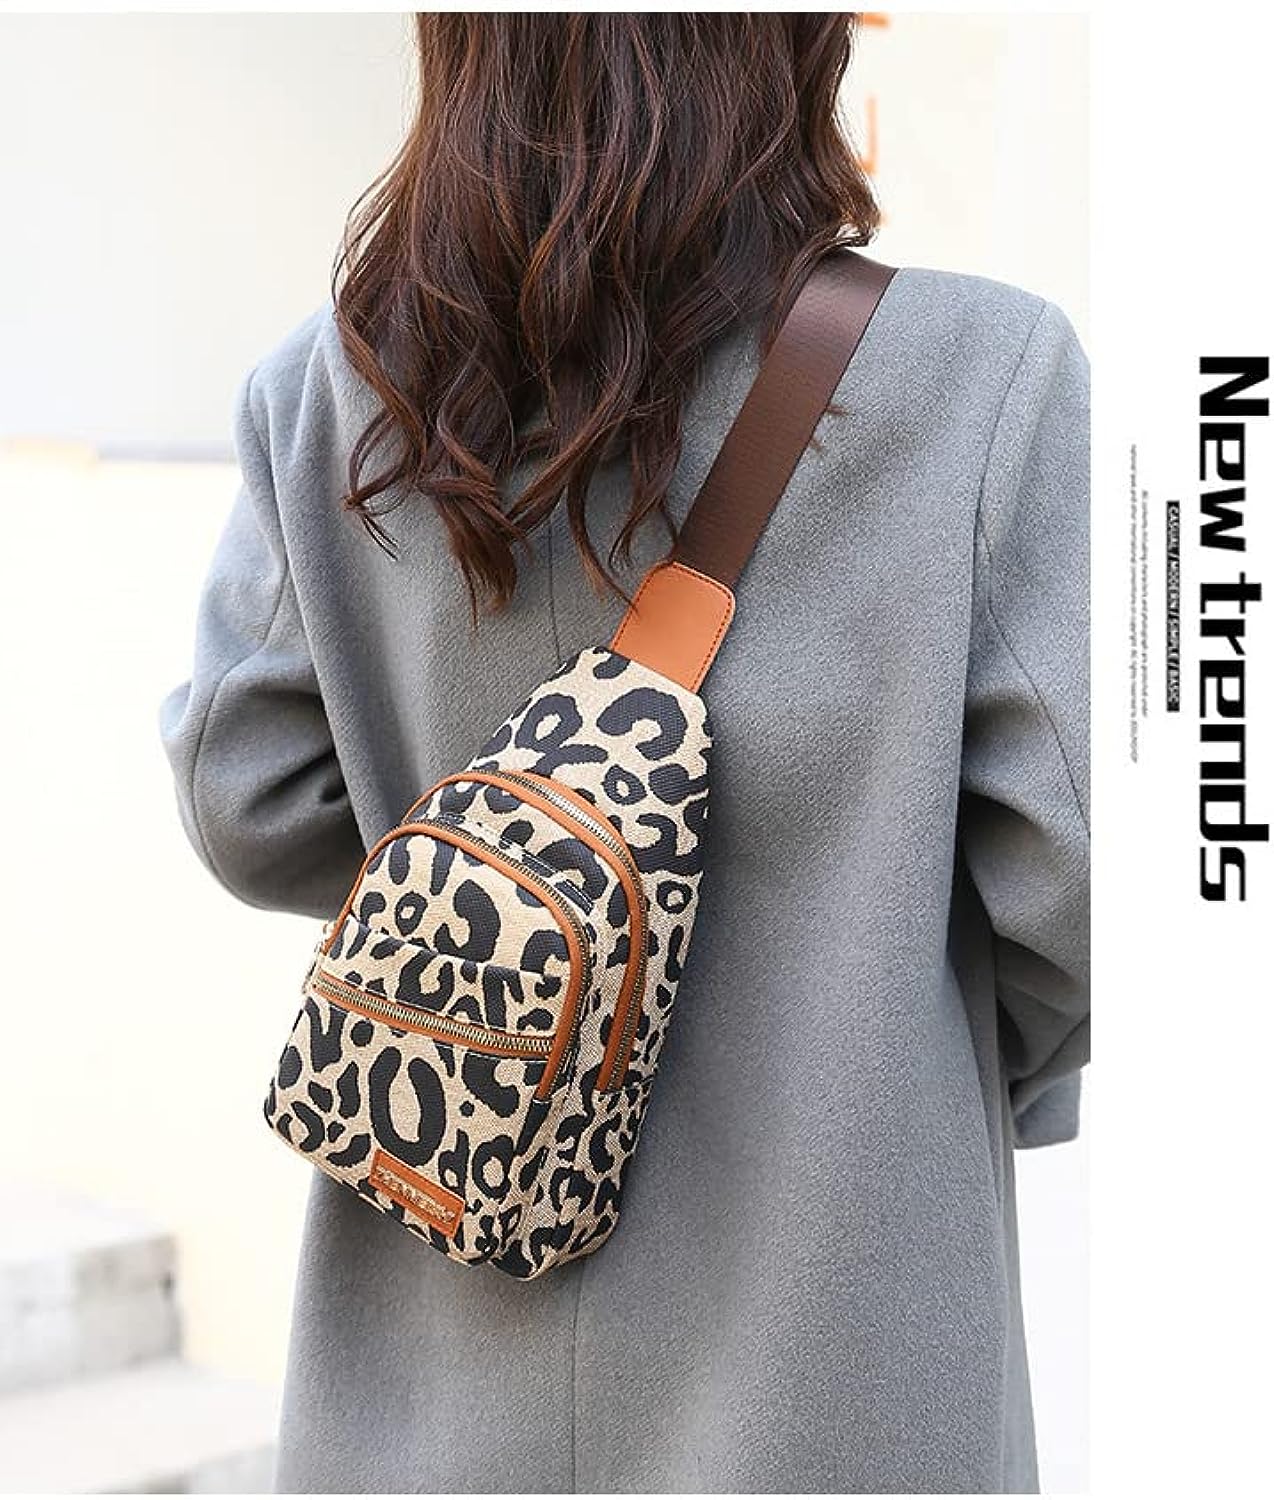 Hiriotin Leopard Print Chest Bag Review - Go Girl Bags